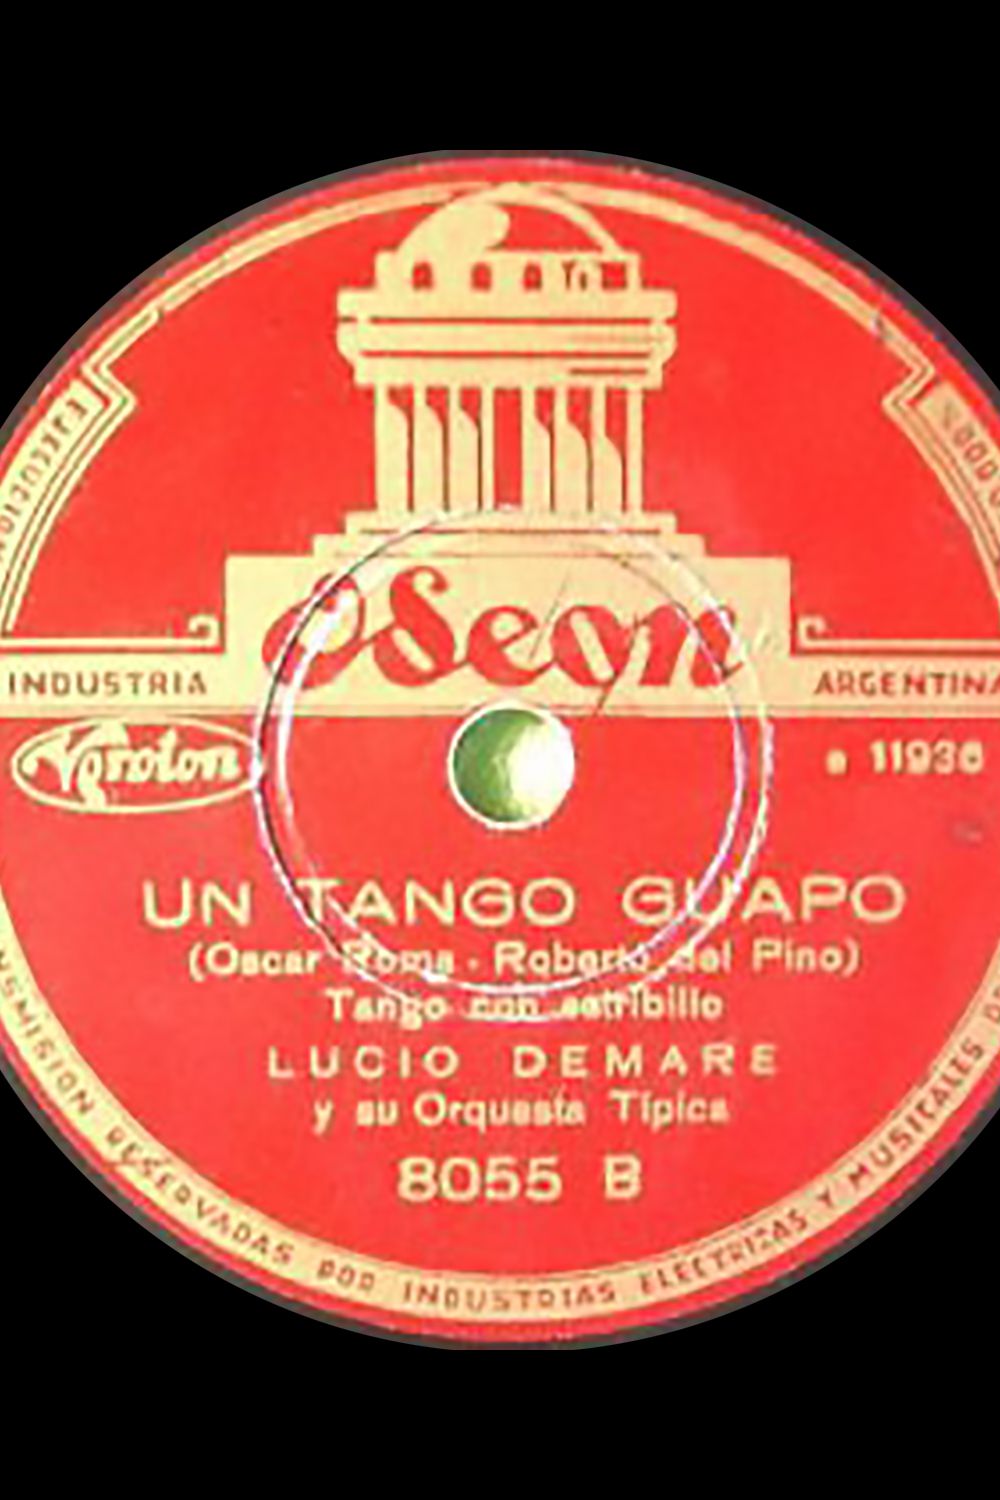 'Un Tango Guapo' Argentine Tango vinyl disc.